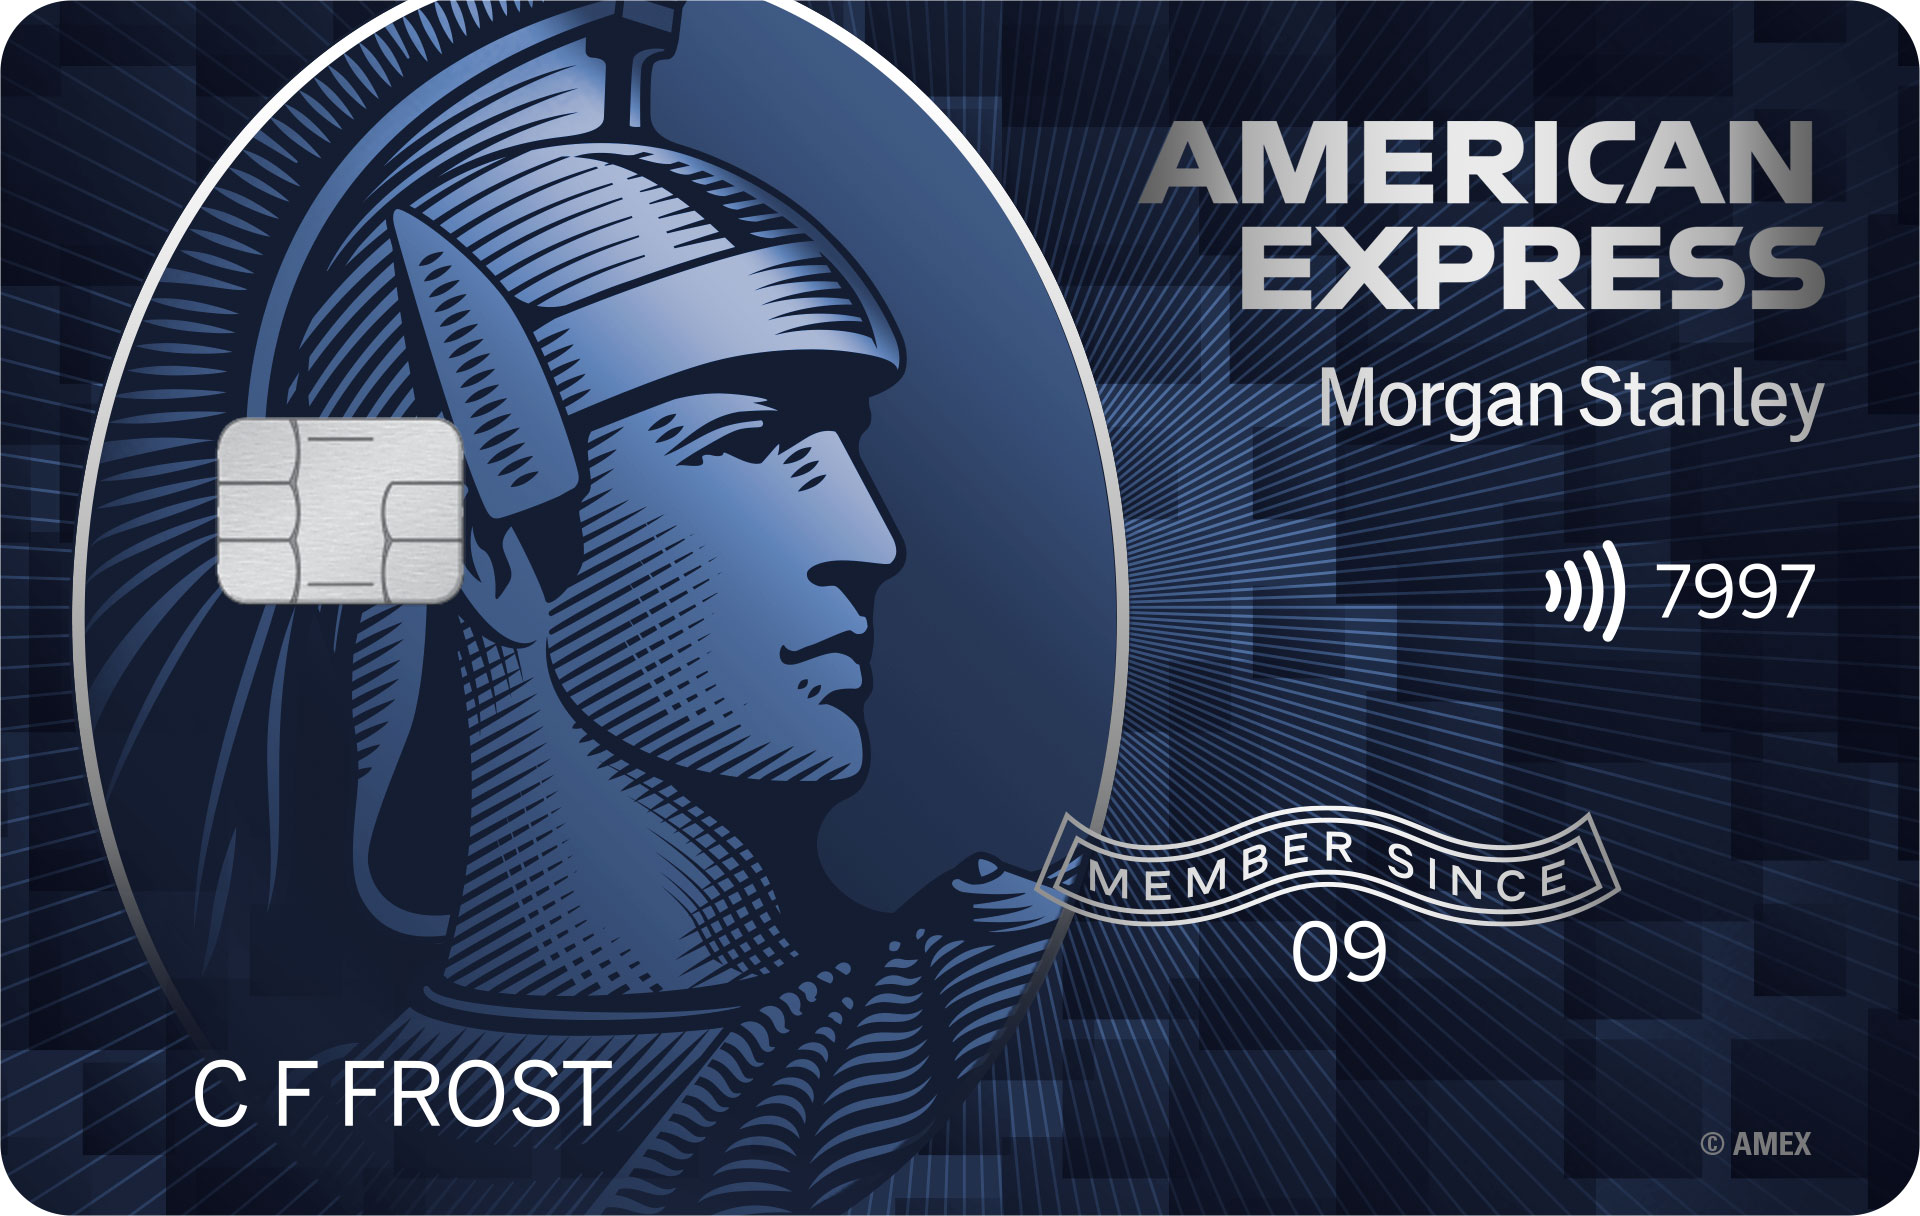 Morgan Stanley's Credit Cards